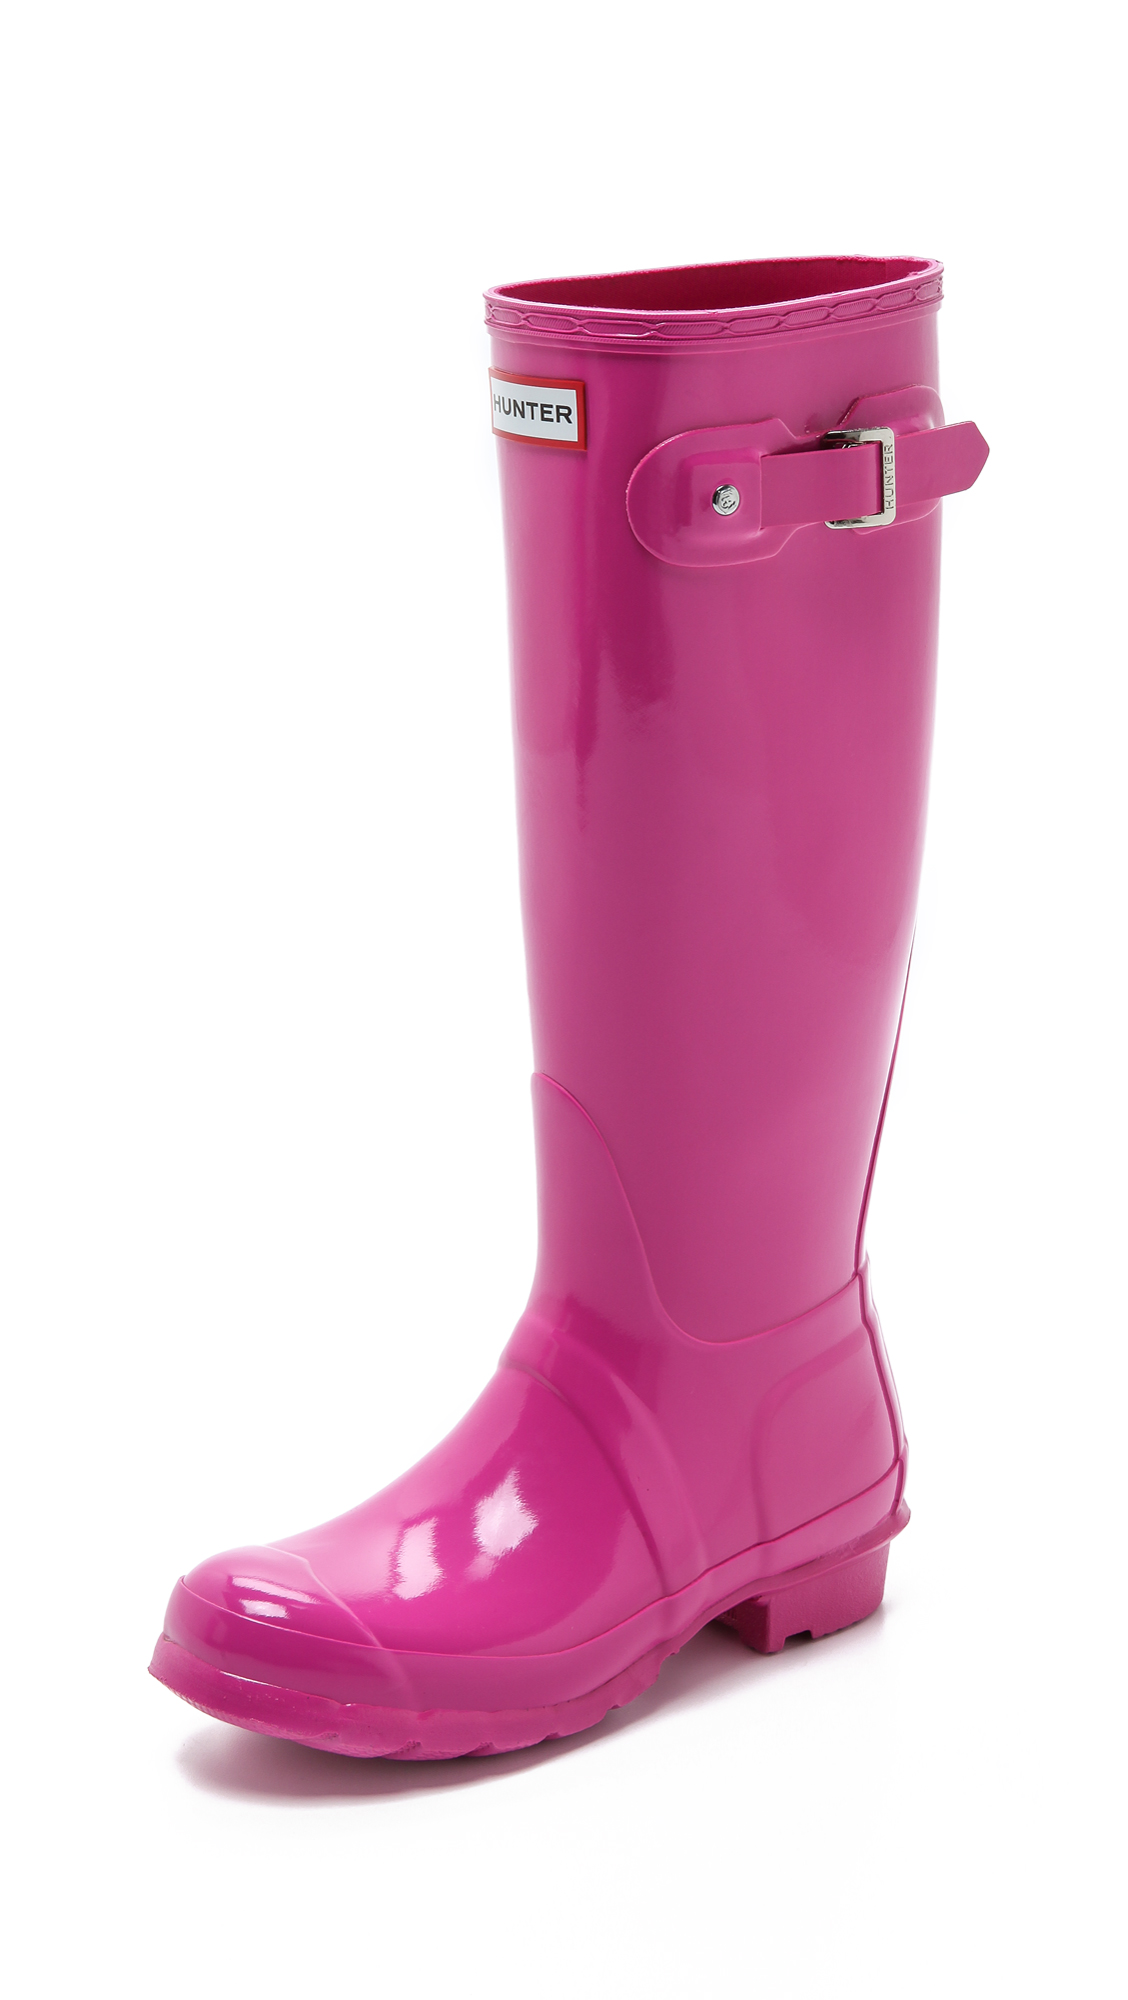 HUNTER Original Tall Gloss Boots in Pink - Lyst